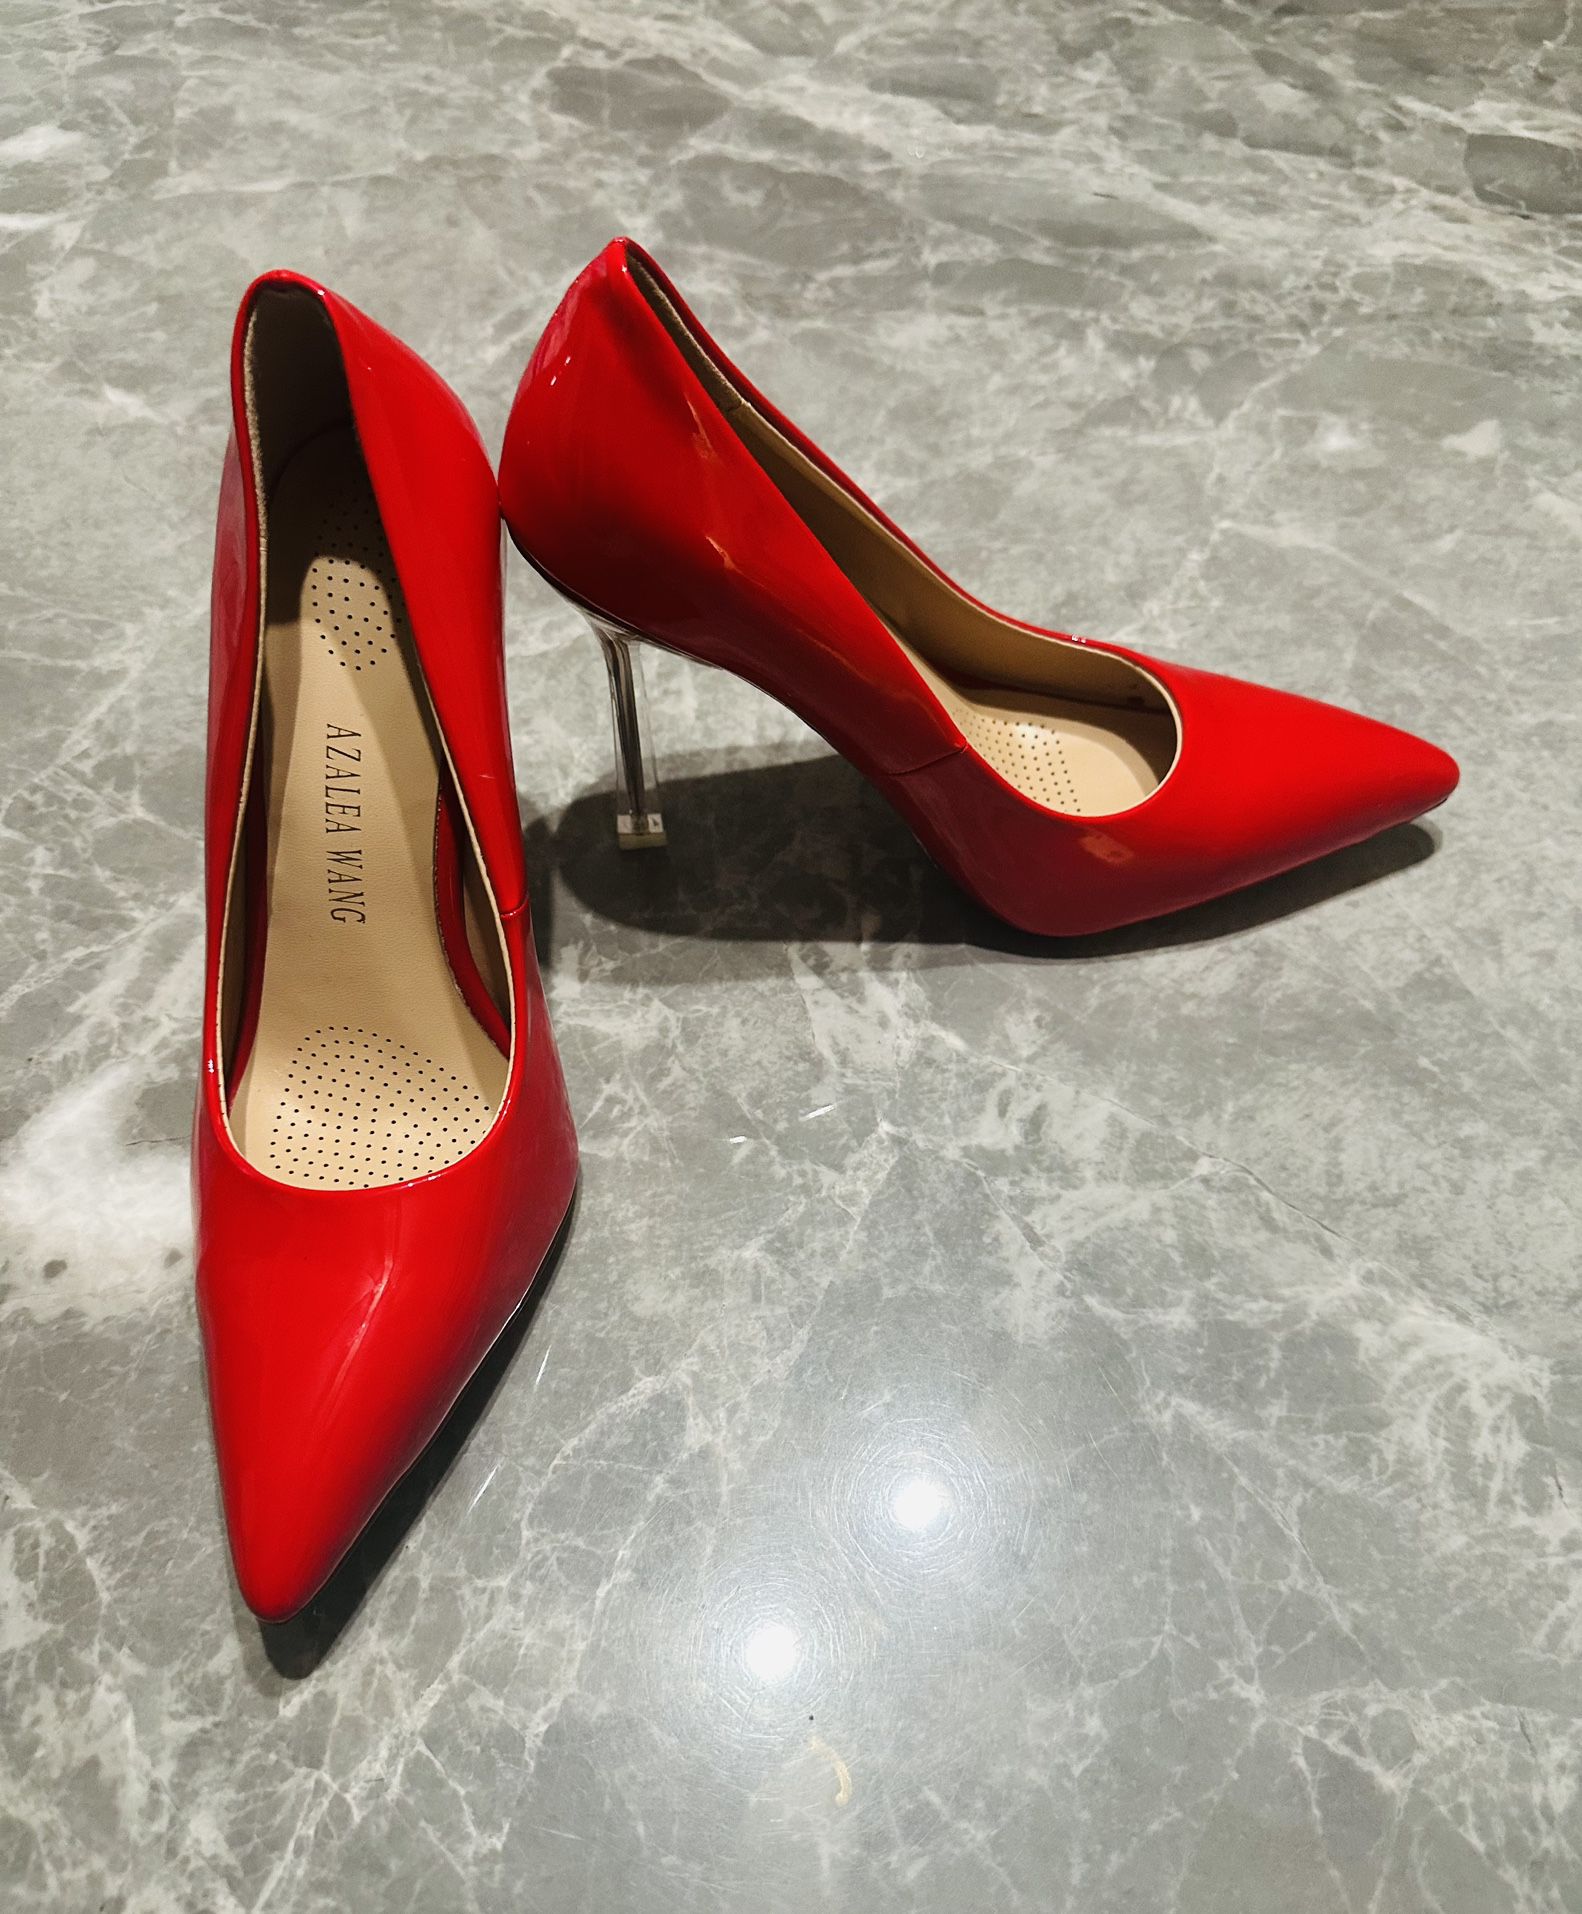 Azalea Wang 8 Apple Red Pumps 4.25” Stiletto Clear Heels Patent Leather